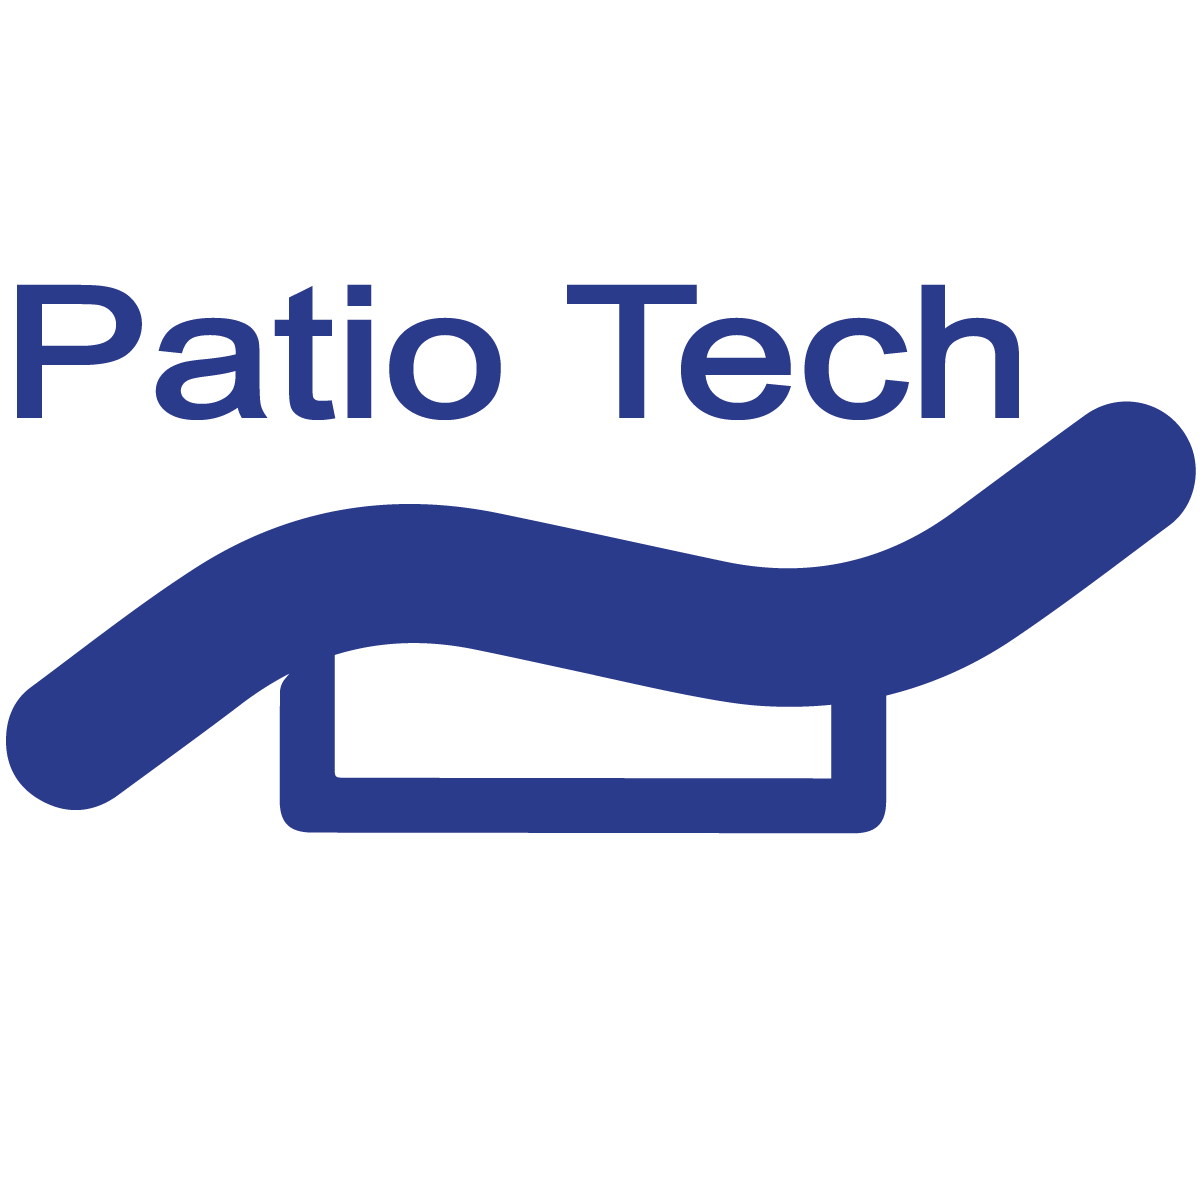 Patiotechfl.com